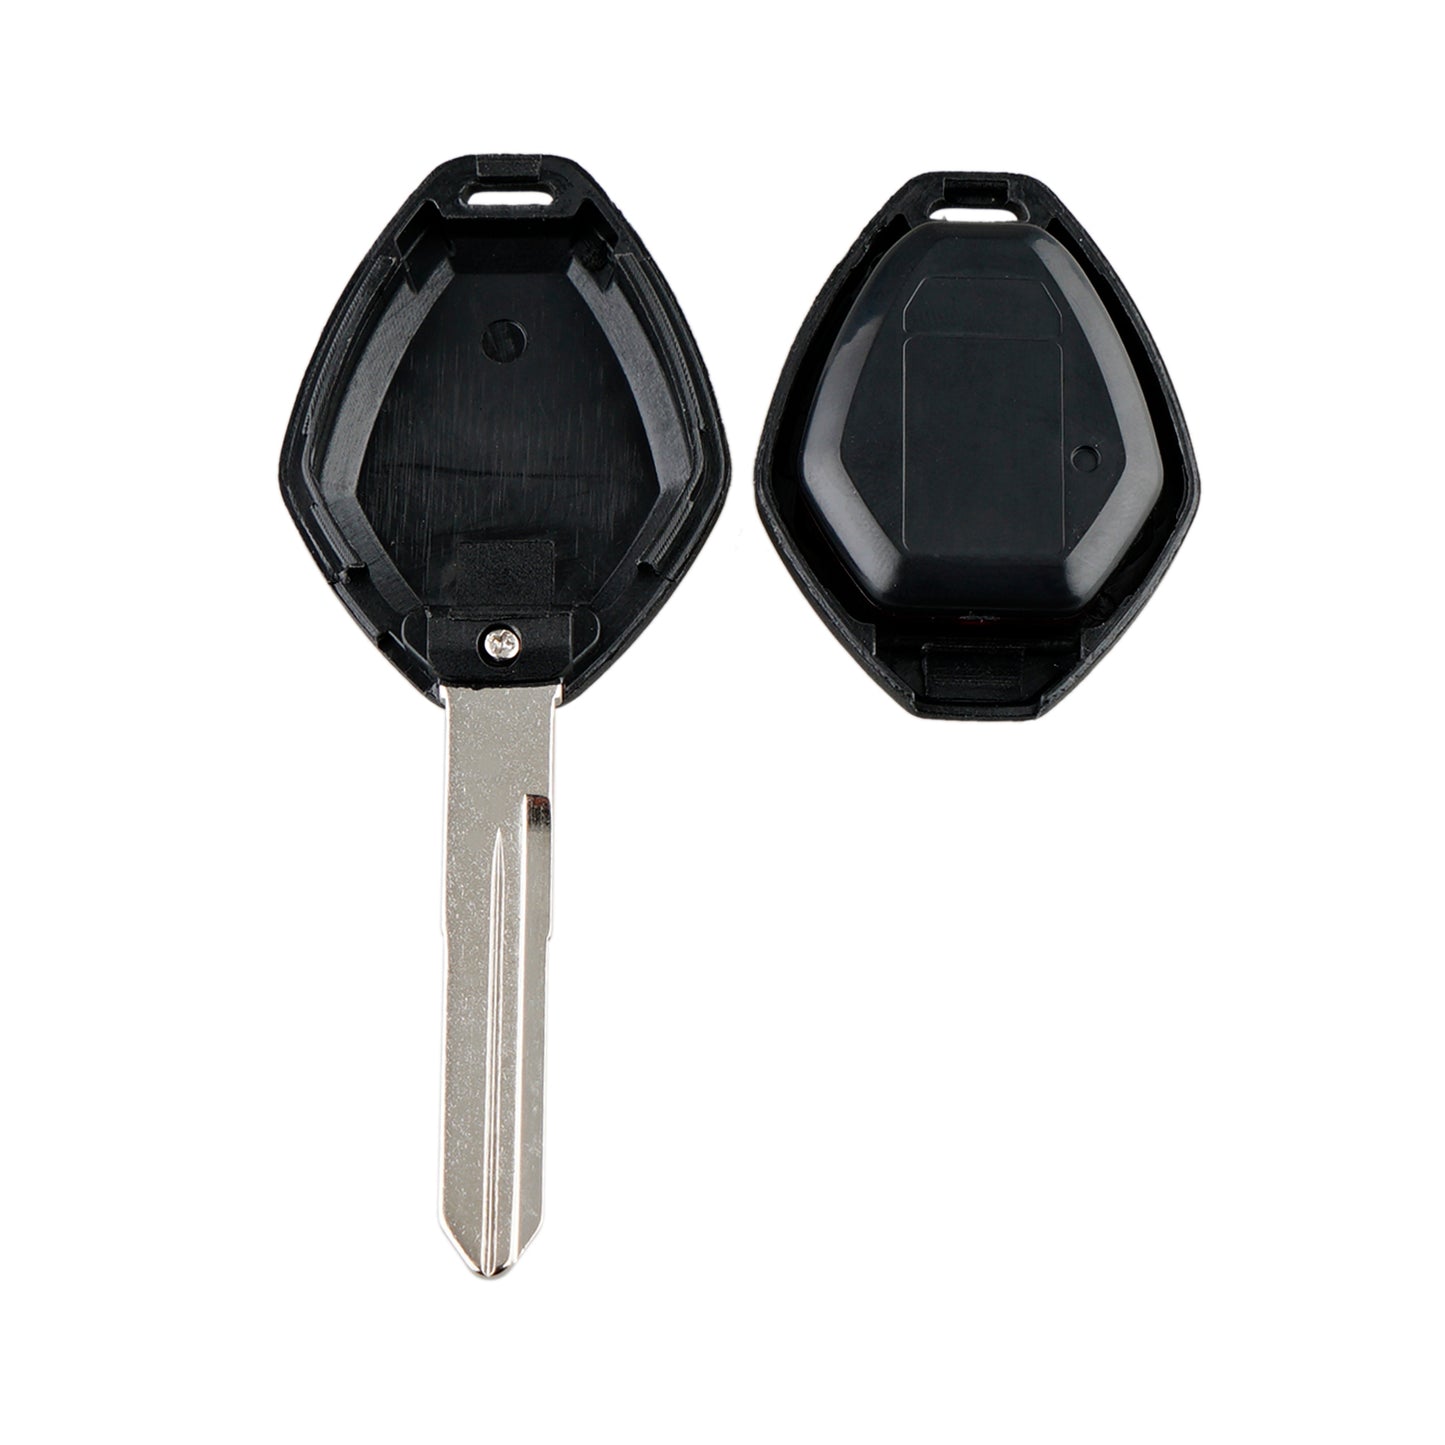 3 Buttons 315MHz Keyless Entry Fob Remote Car Key For 2011 - 2017 Mitsubishi I-MeiV Outlander Sport FCC ID: OUCG8D-625M-A-HF SKU : J441